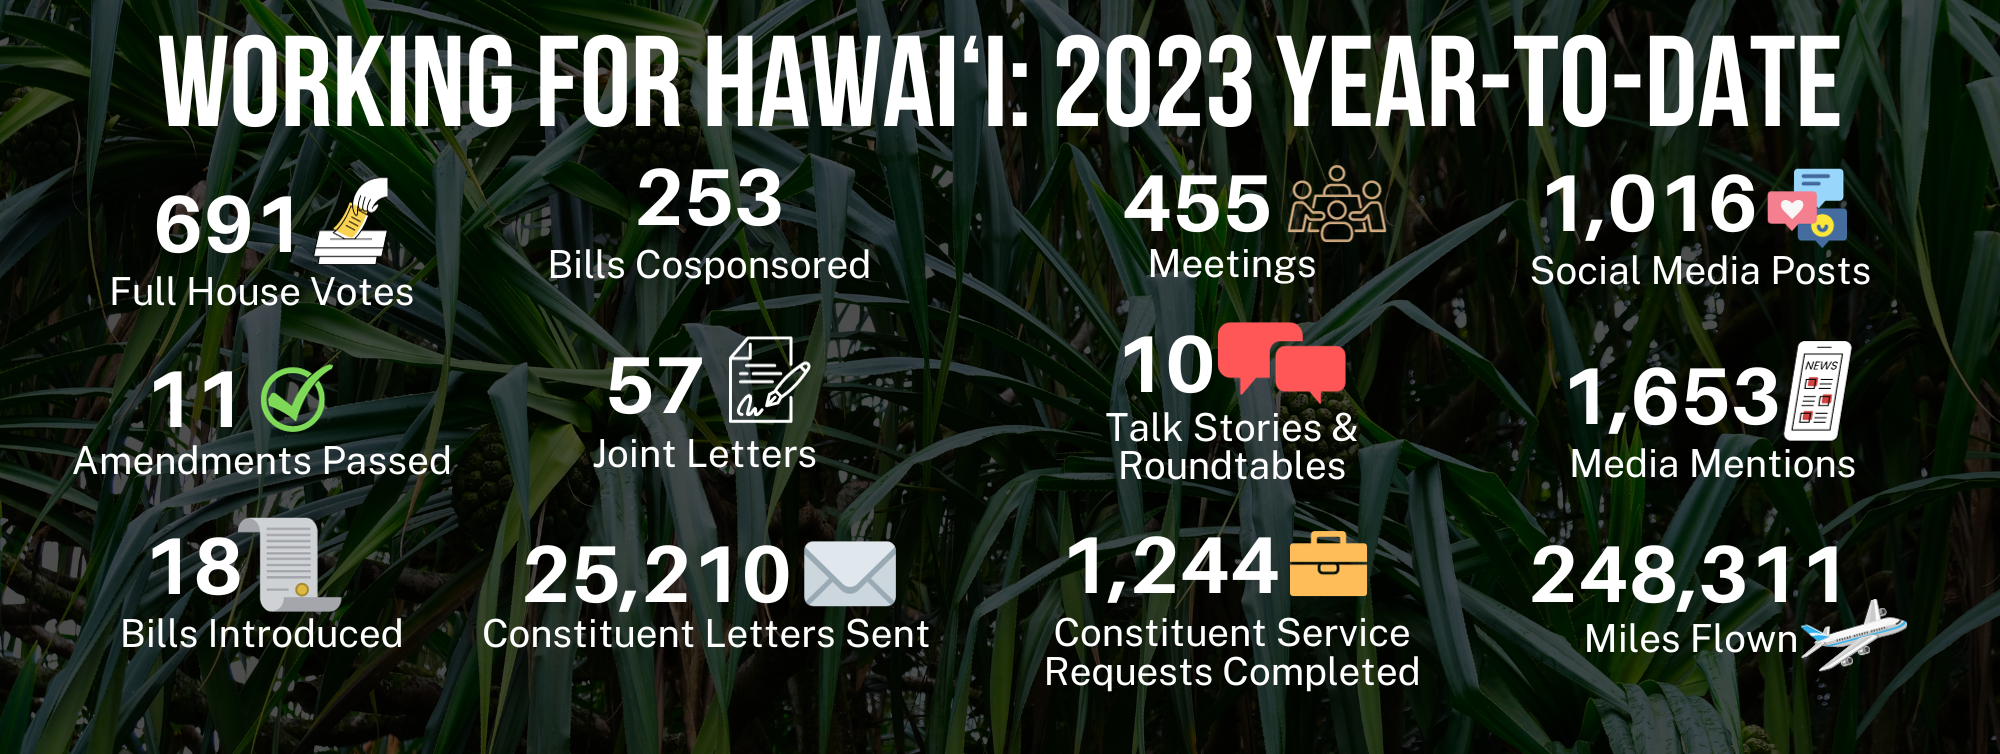 Working for Hawaii 2023